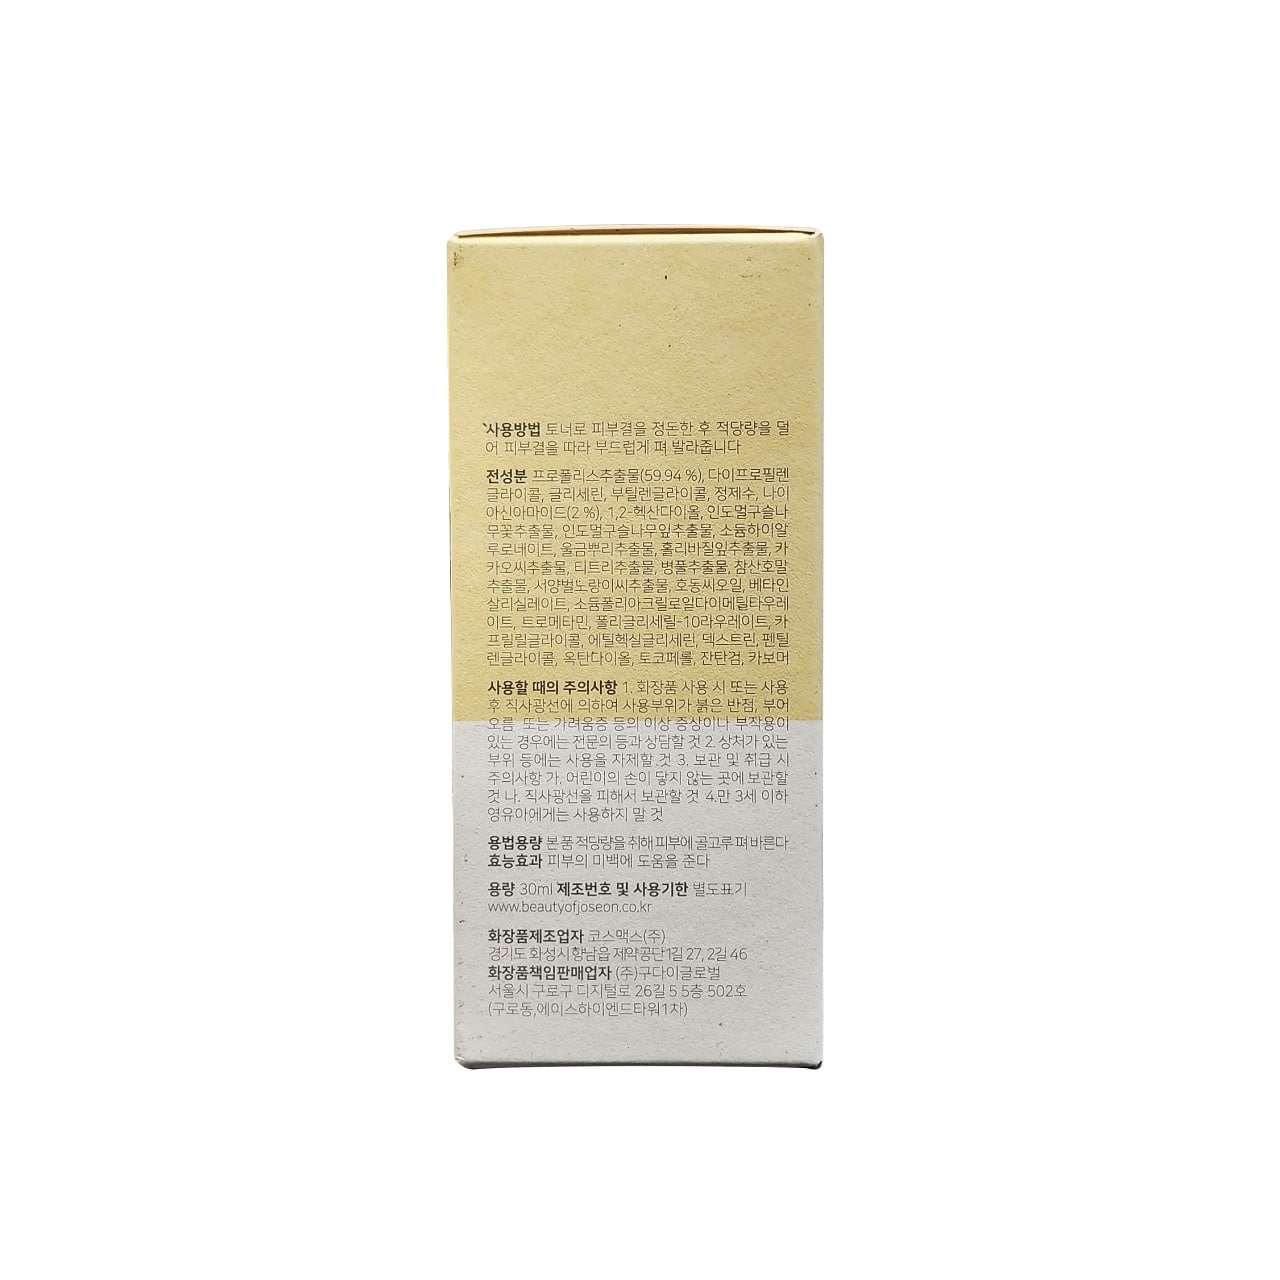 Directions, ingredients, cautions for Beauty of Joseon Glow Serum Propolis + Niacinamide (30 mL) in Korean